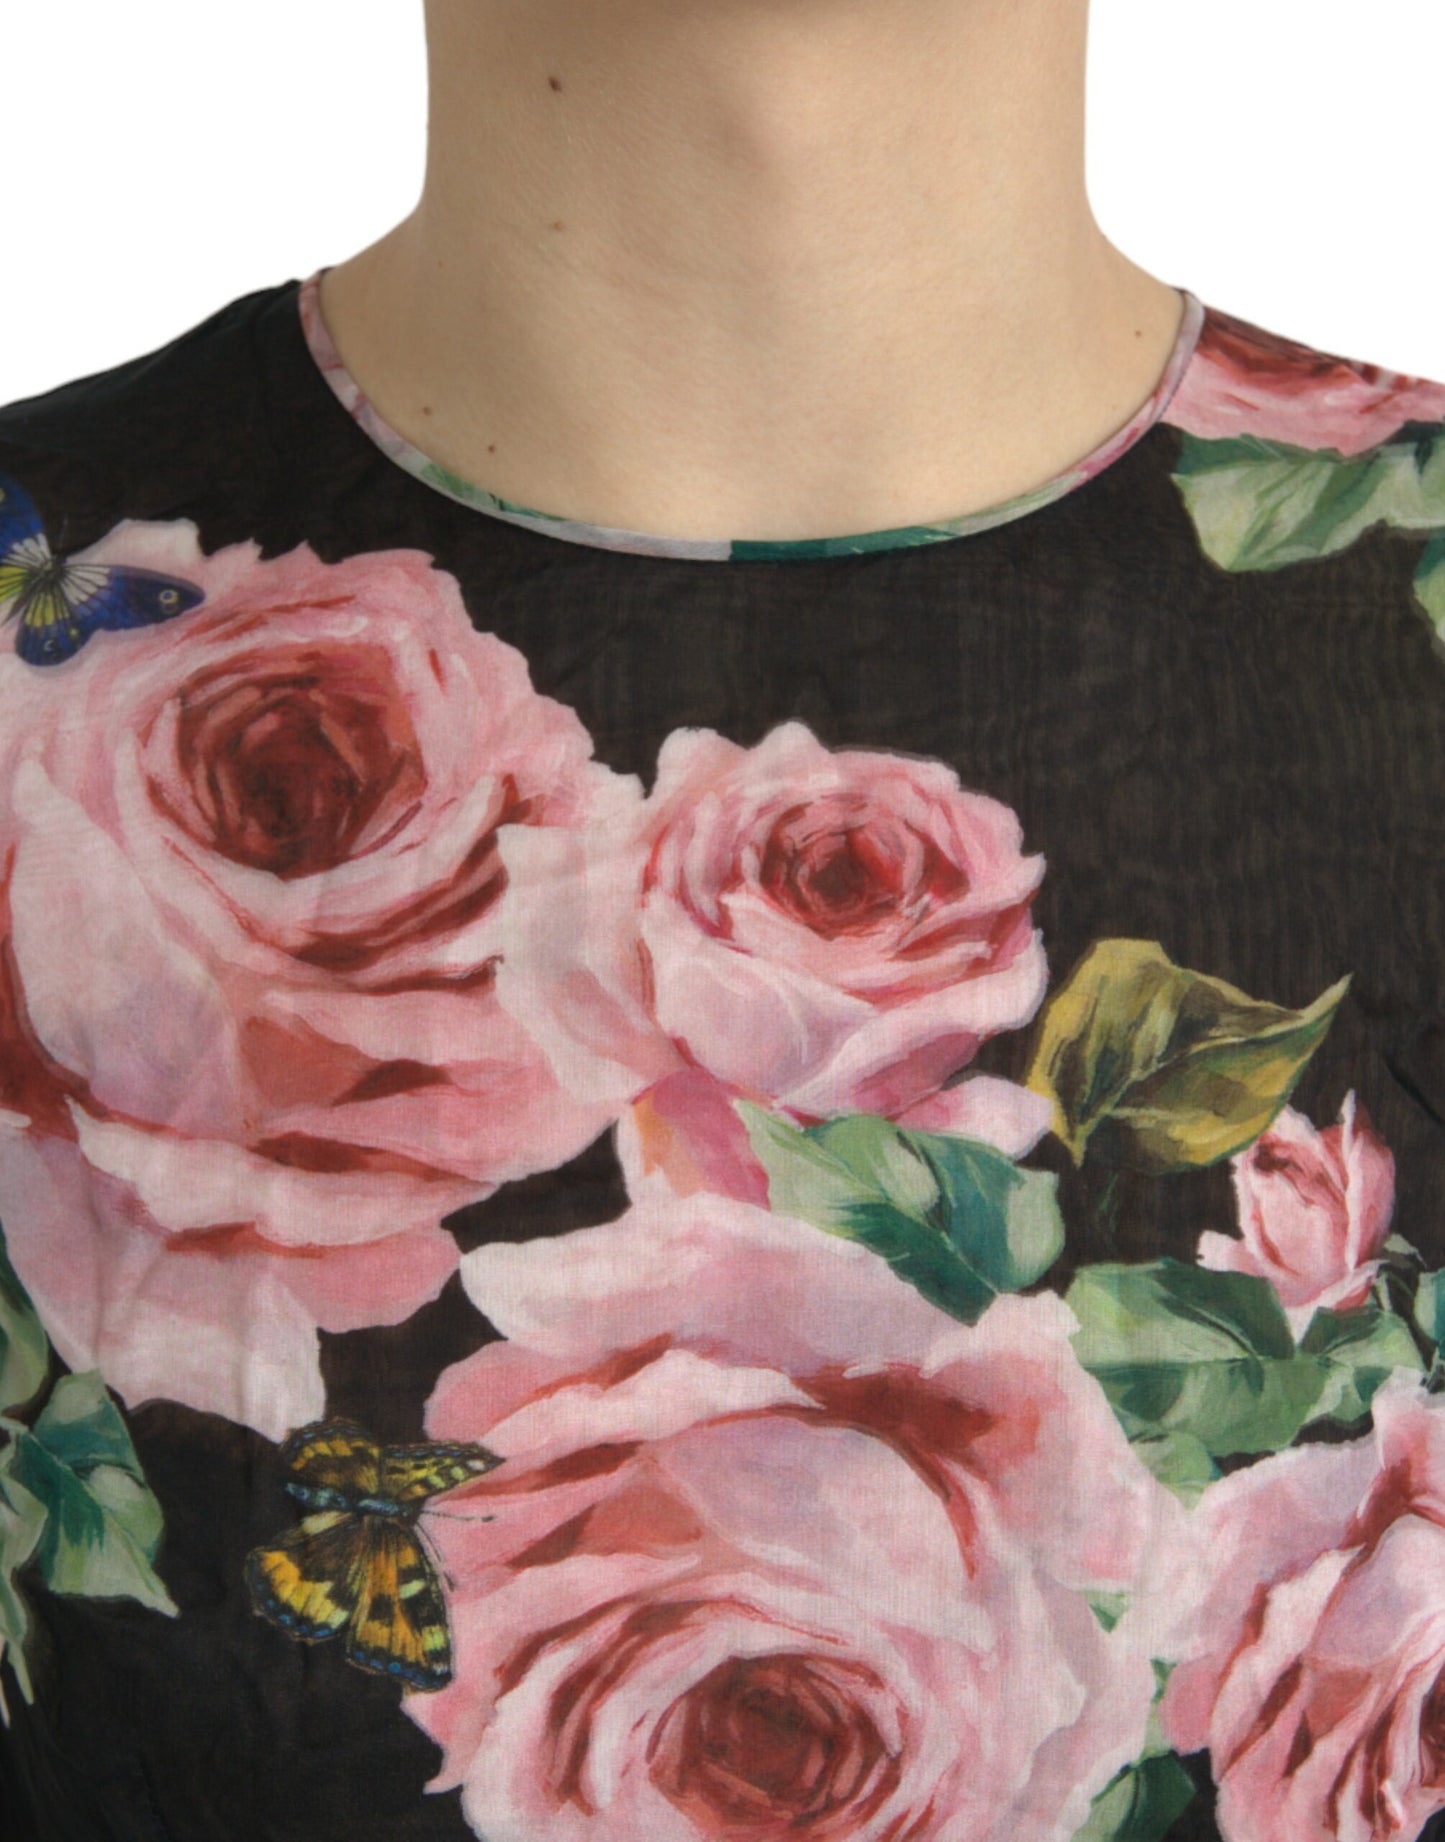 Dolce & Gabbana Elegant Black Silk Maxi Dress with Rose Print